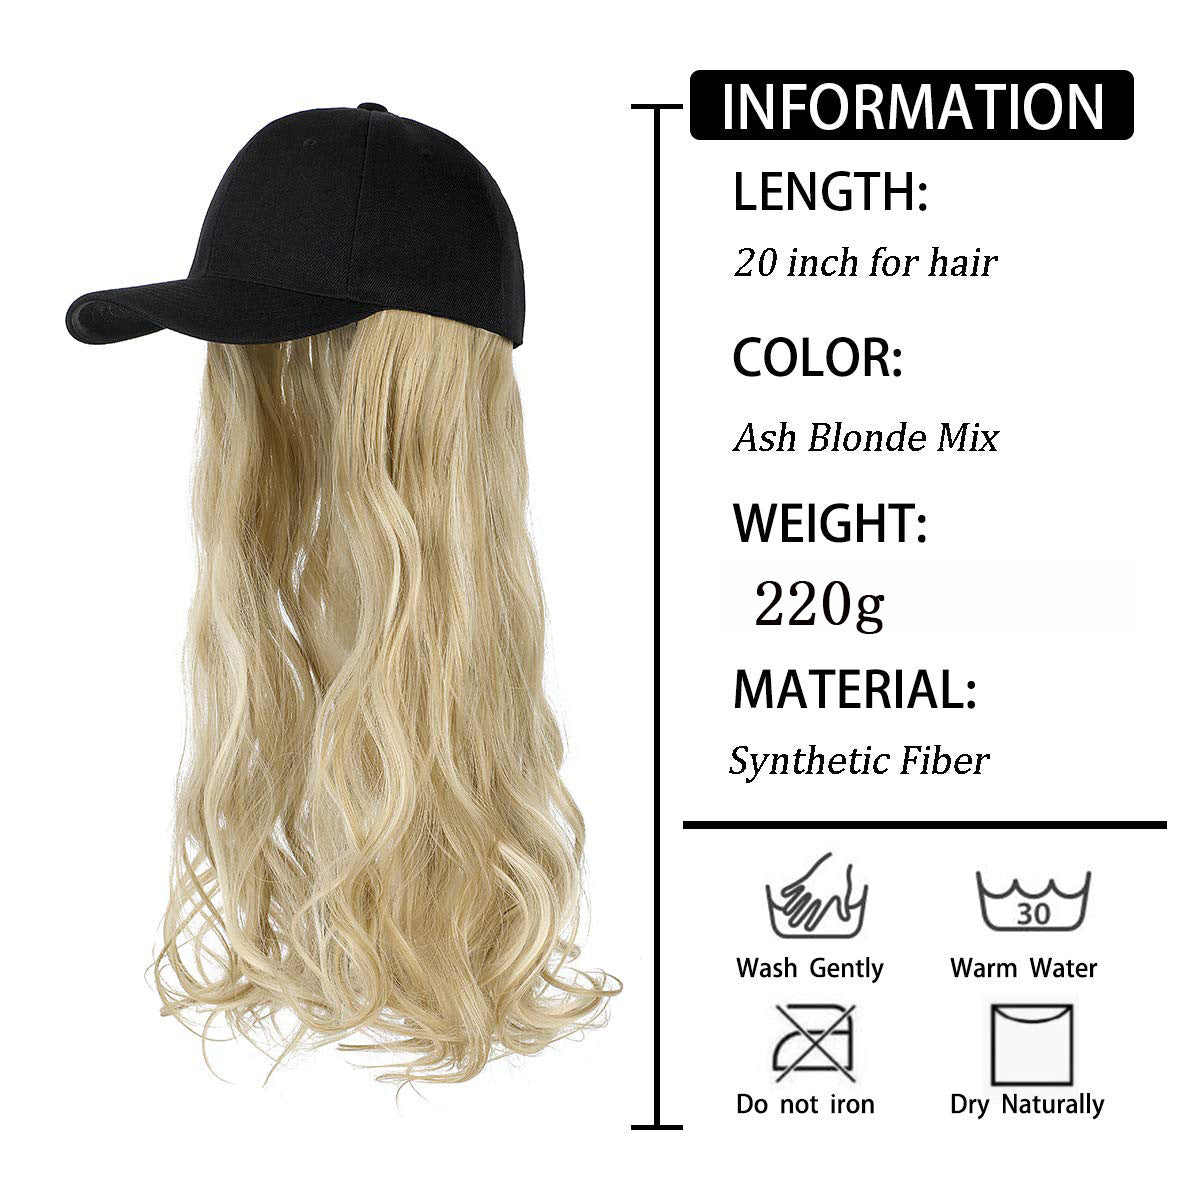 Long Wavy Curly Hair Wig Cap Natural Integrated Baseball Cap Wig in Black, Blonde, and Brown